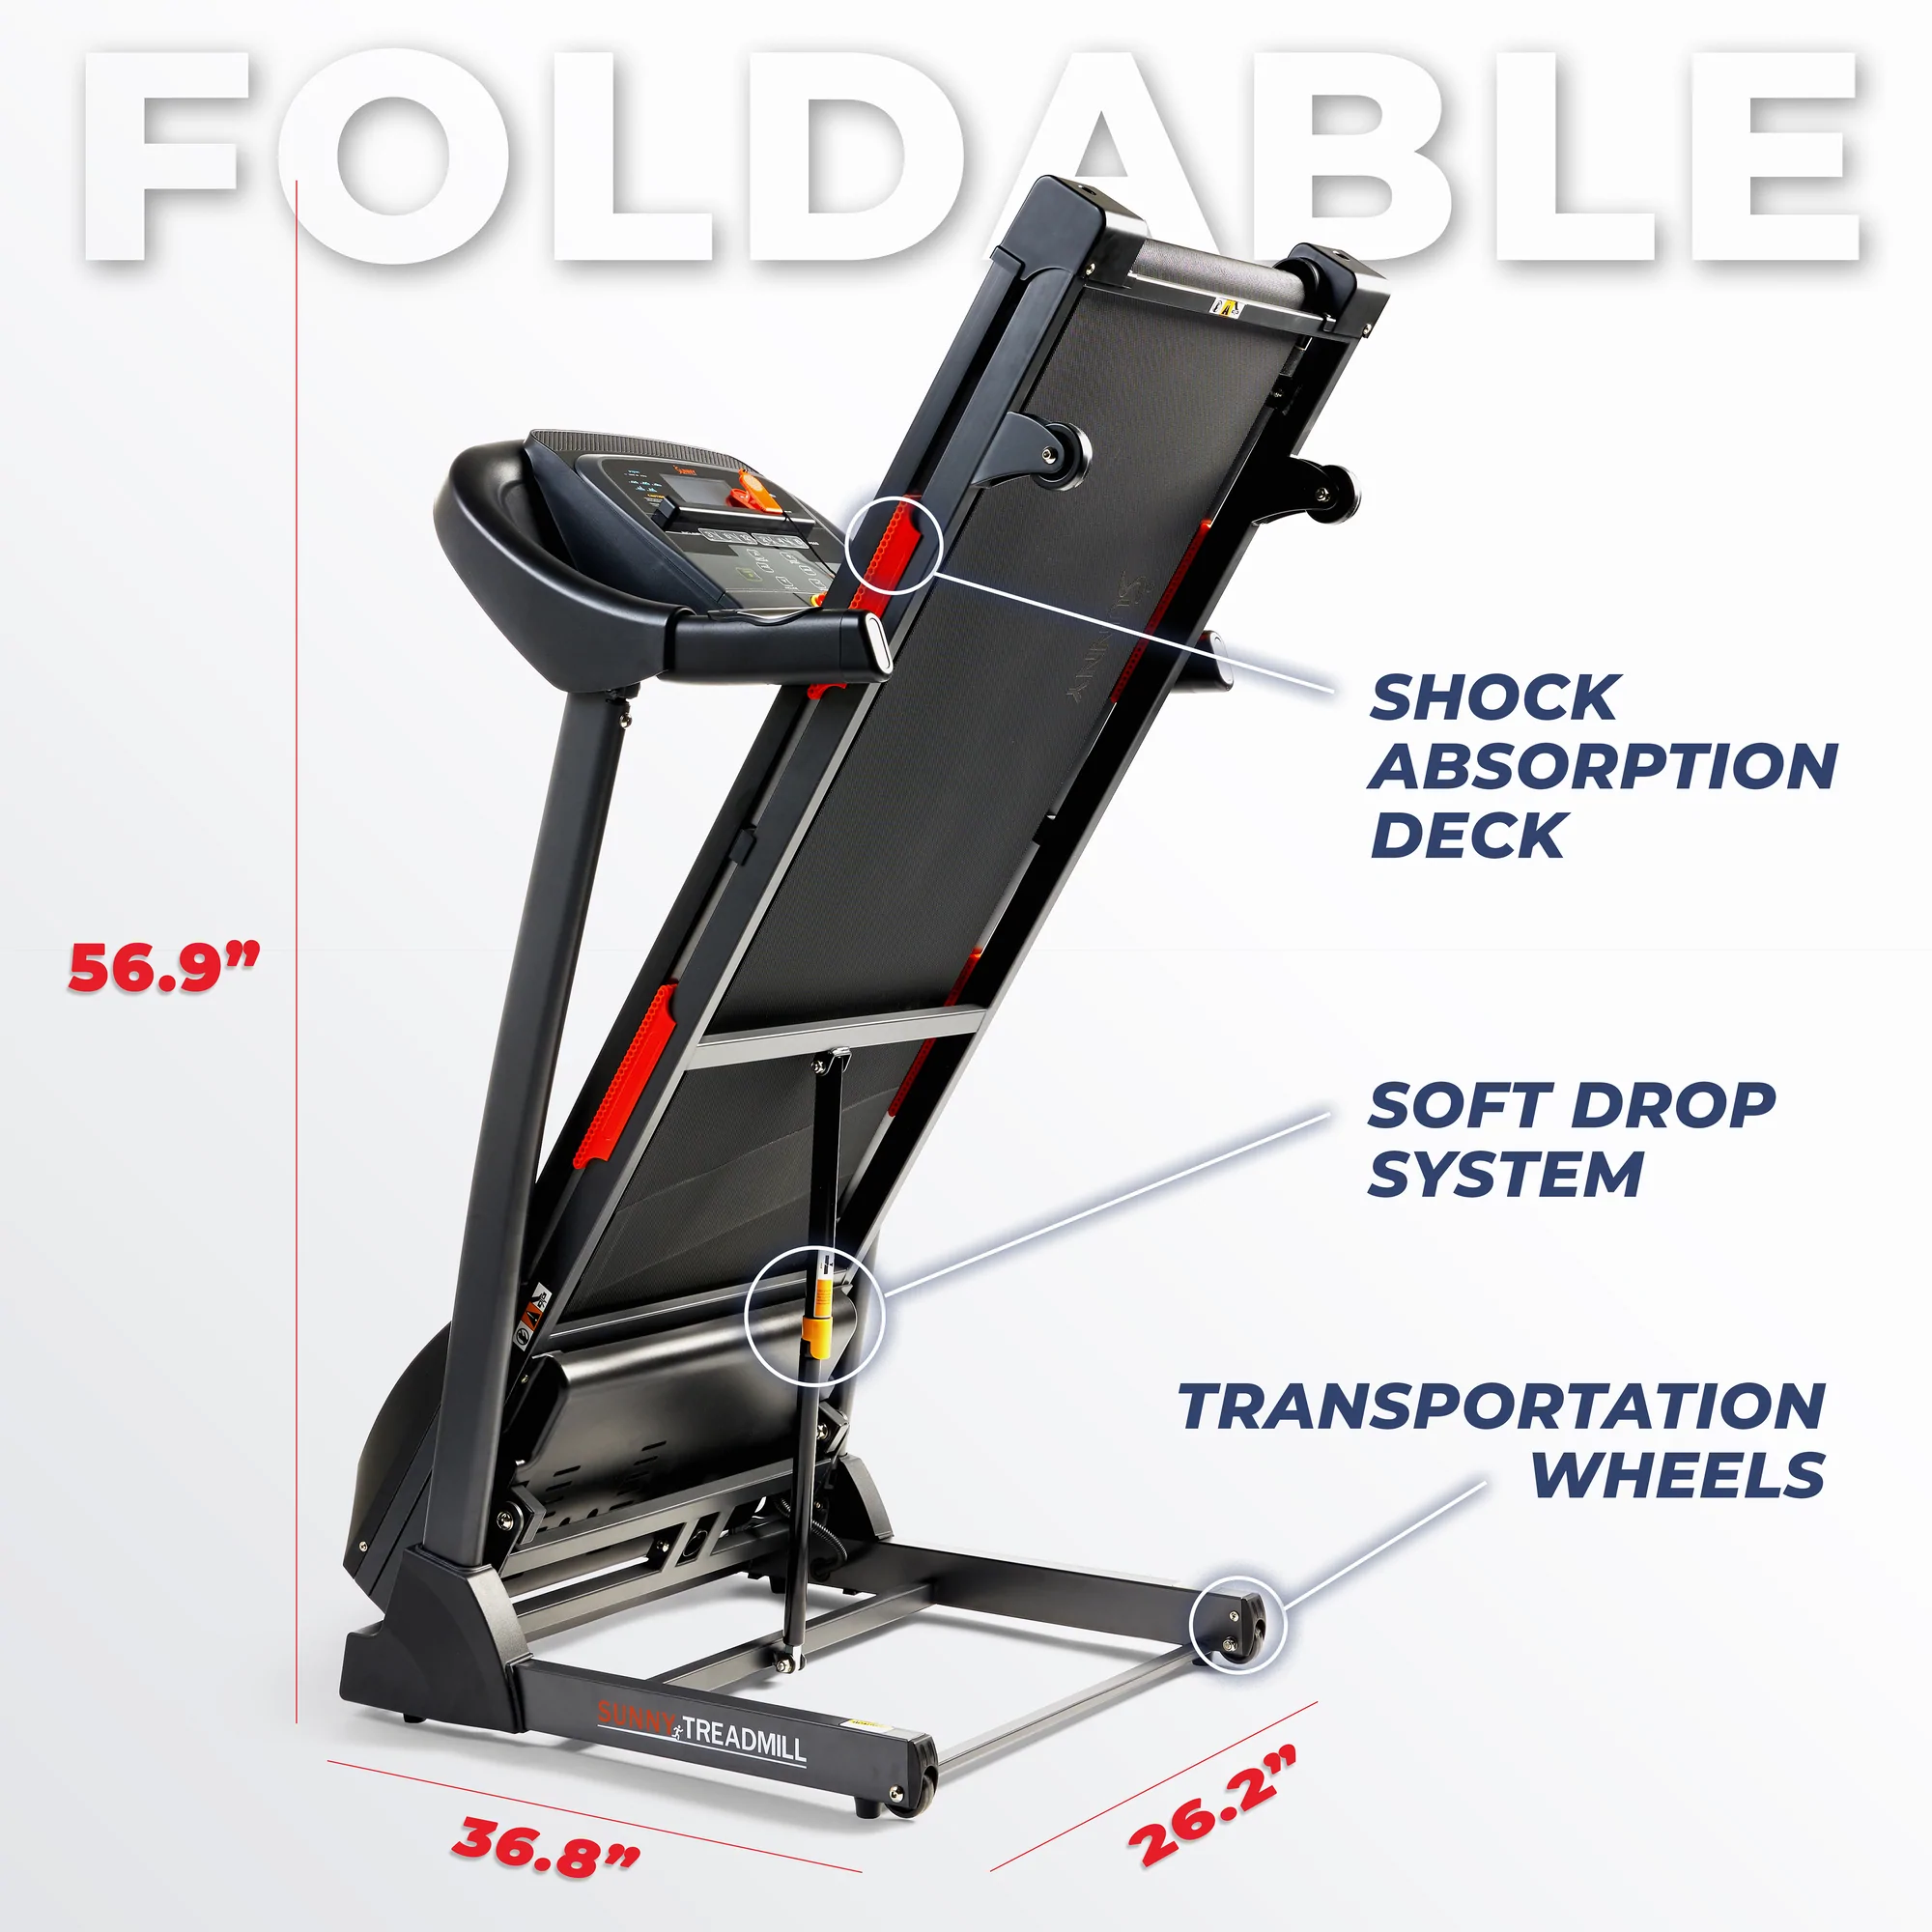 Sunny Health & Fitness Premium Folding Auto-Incline Smart Treadmill with Exclusive SunnyFit App Enhanced Bluetooth Connectivity - Iron Life USA